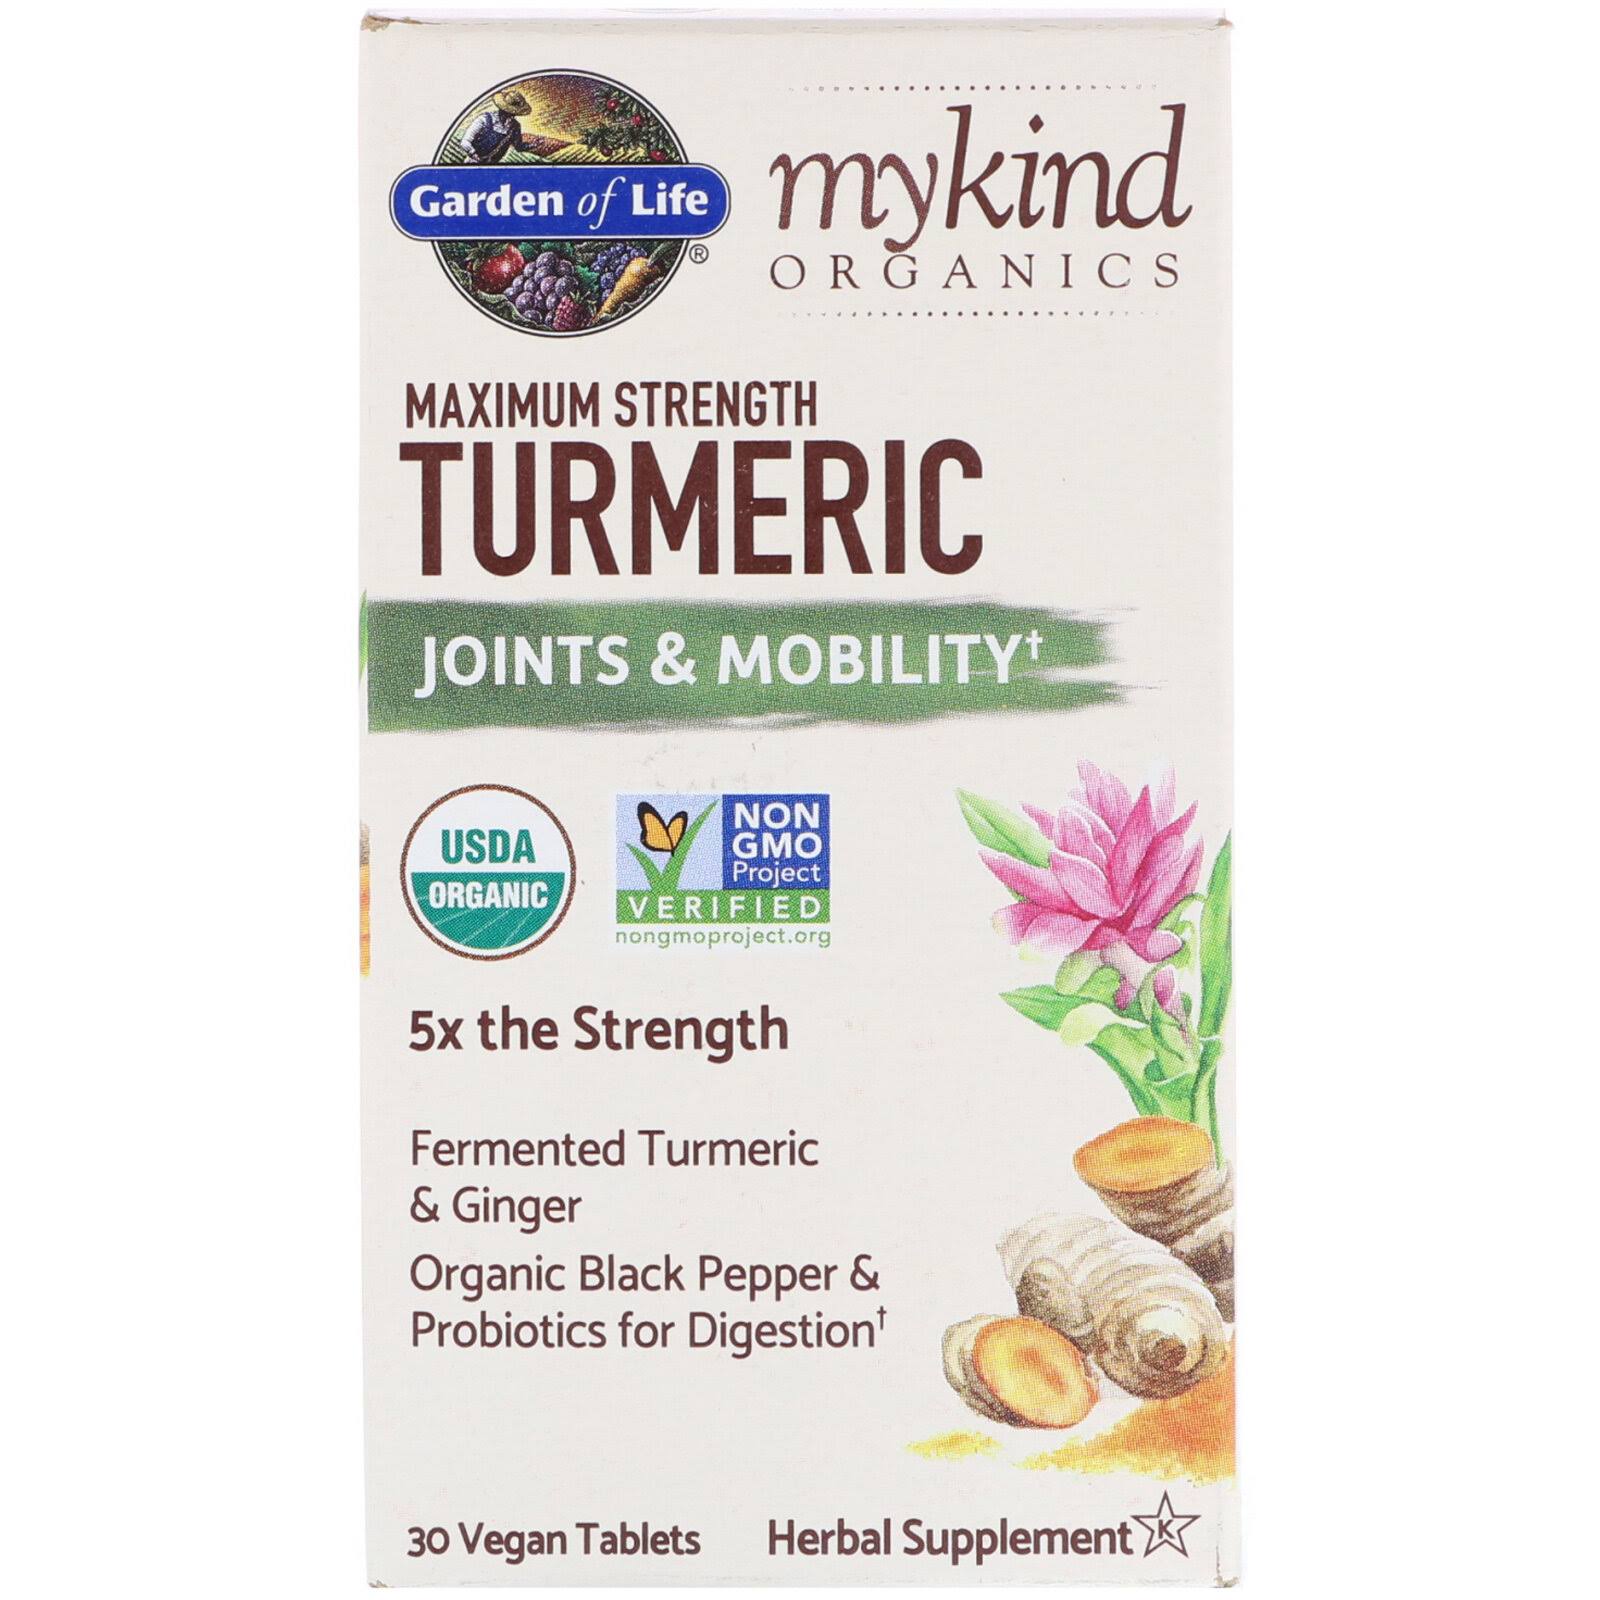 Garden of Life MyKind Organics Maximum Strength Turmeric Joints & Mobility 30 Vegan Tablets